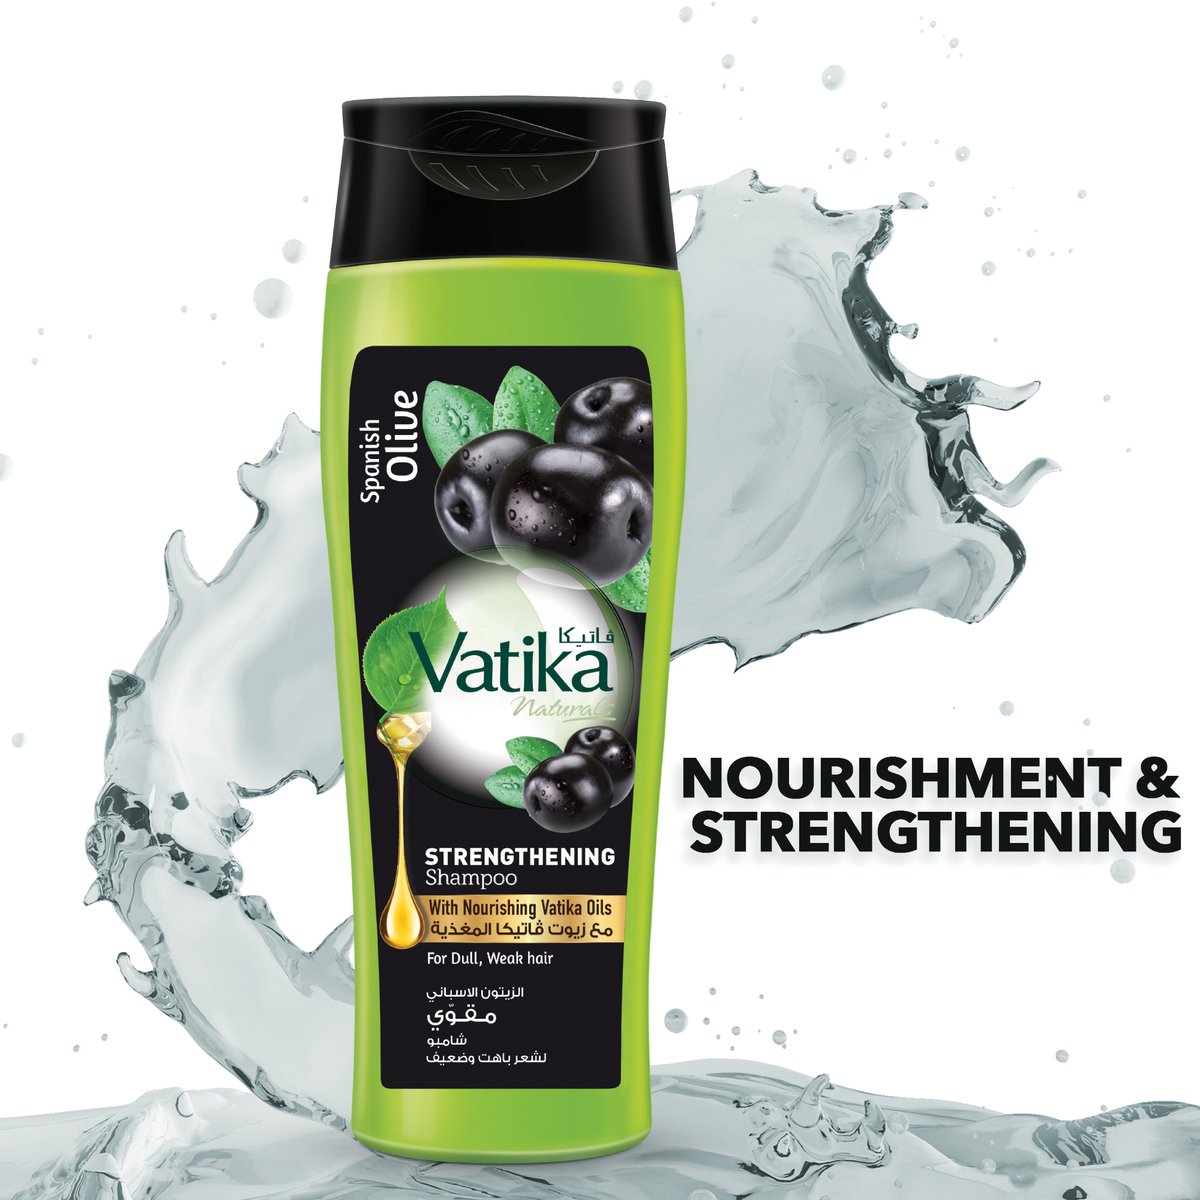 Vatika Naturals Spanish Olive Strengthening Shampoo For Dull and Weak Hair 400 ml